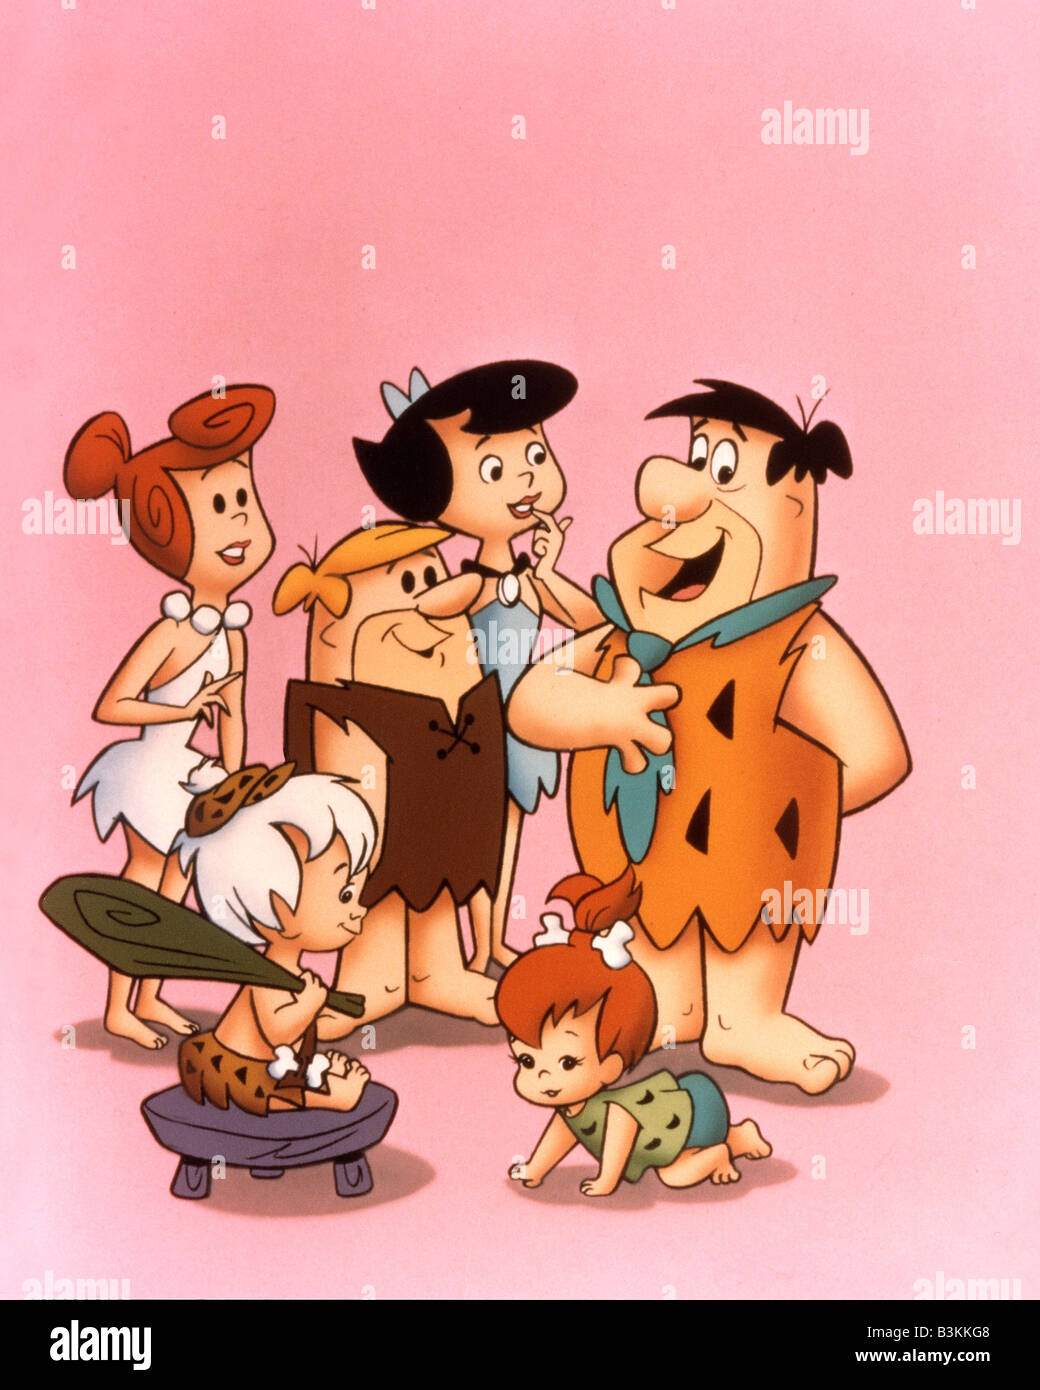 Flintstones cartoon hi-res stock photography and images - Alamy